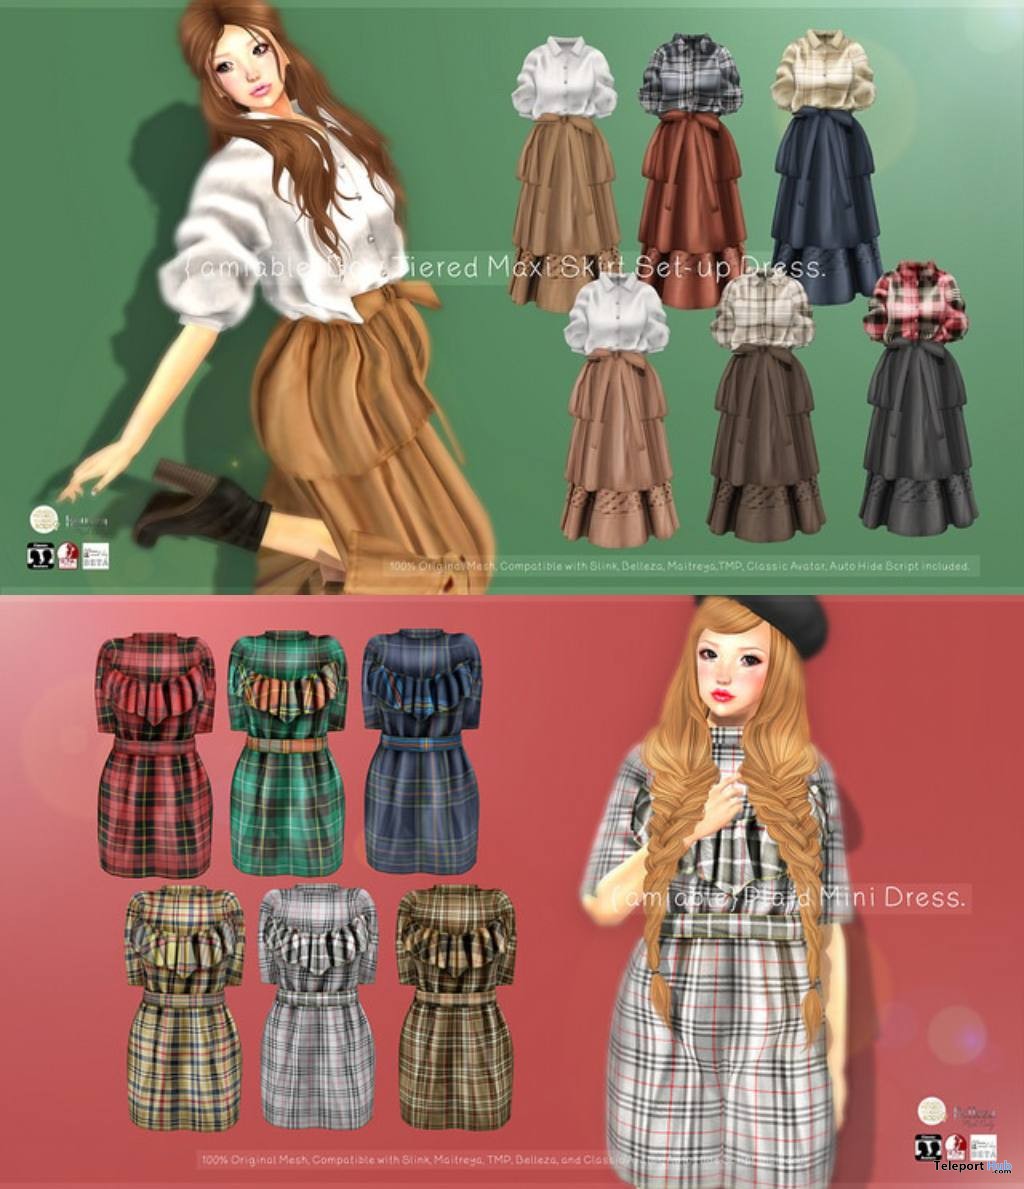 Bow Tiered Maxi Skirt Set-up Dress & Plaid Mini Dress 50% Off Promo by {amiable} @ N21 October 2018 - Teleport Hub - teleporthub.com